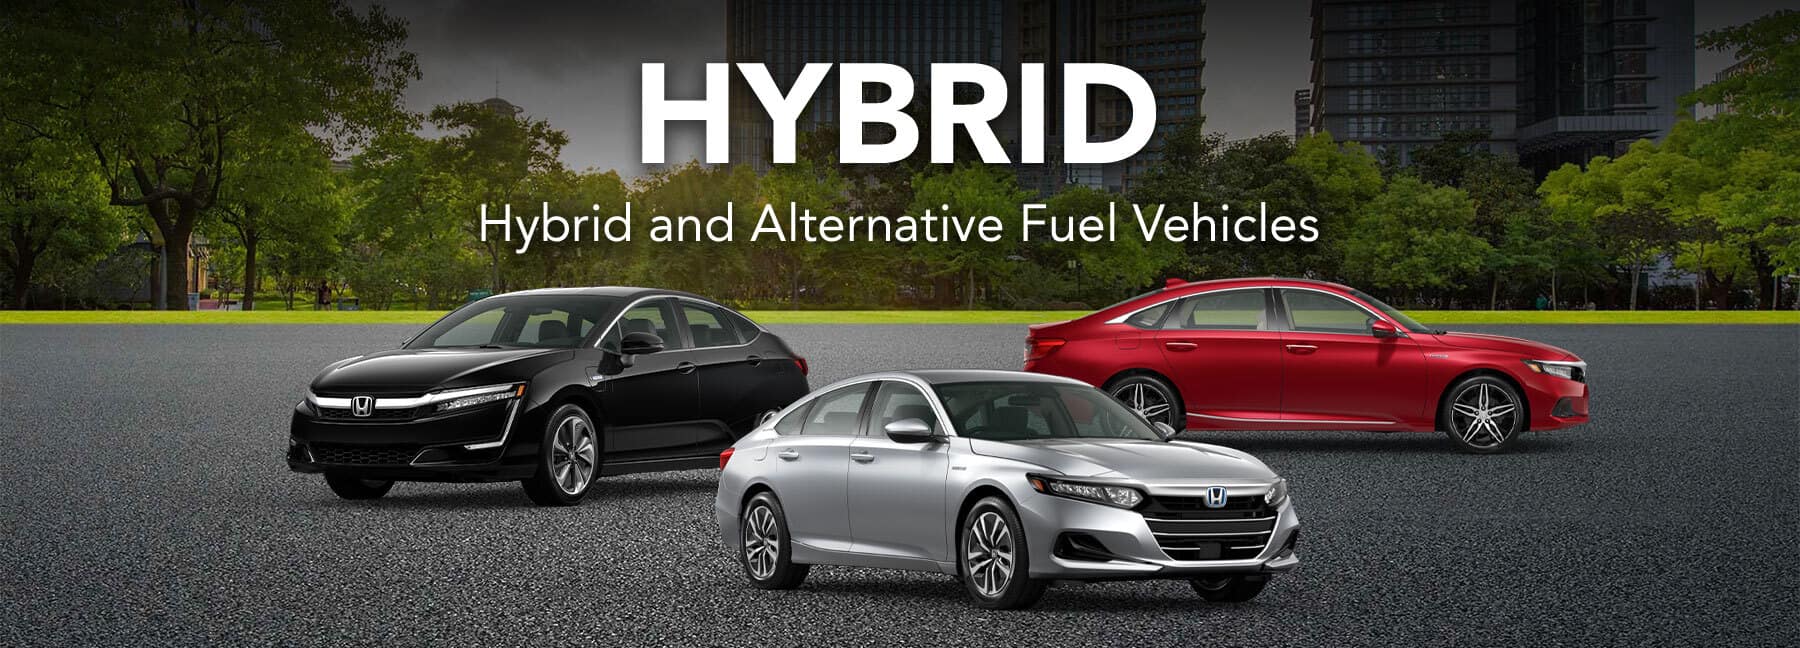 Honda Hybrid Cars in Illinois 